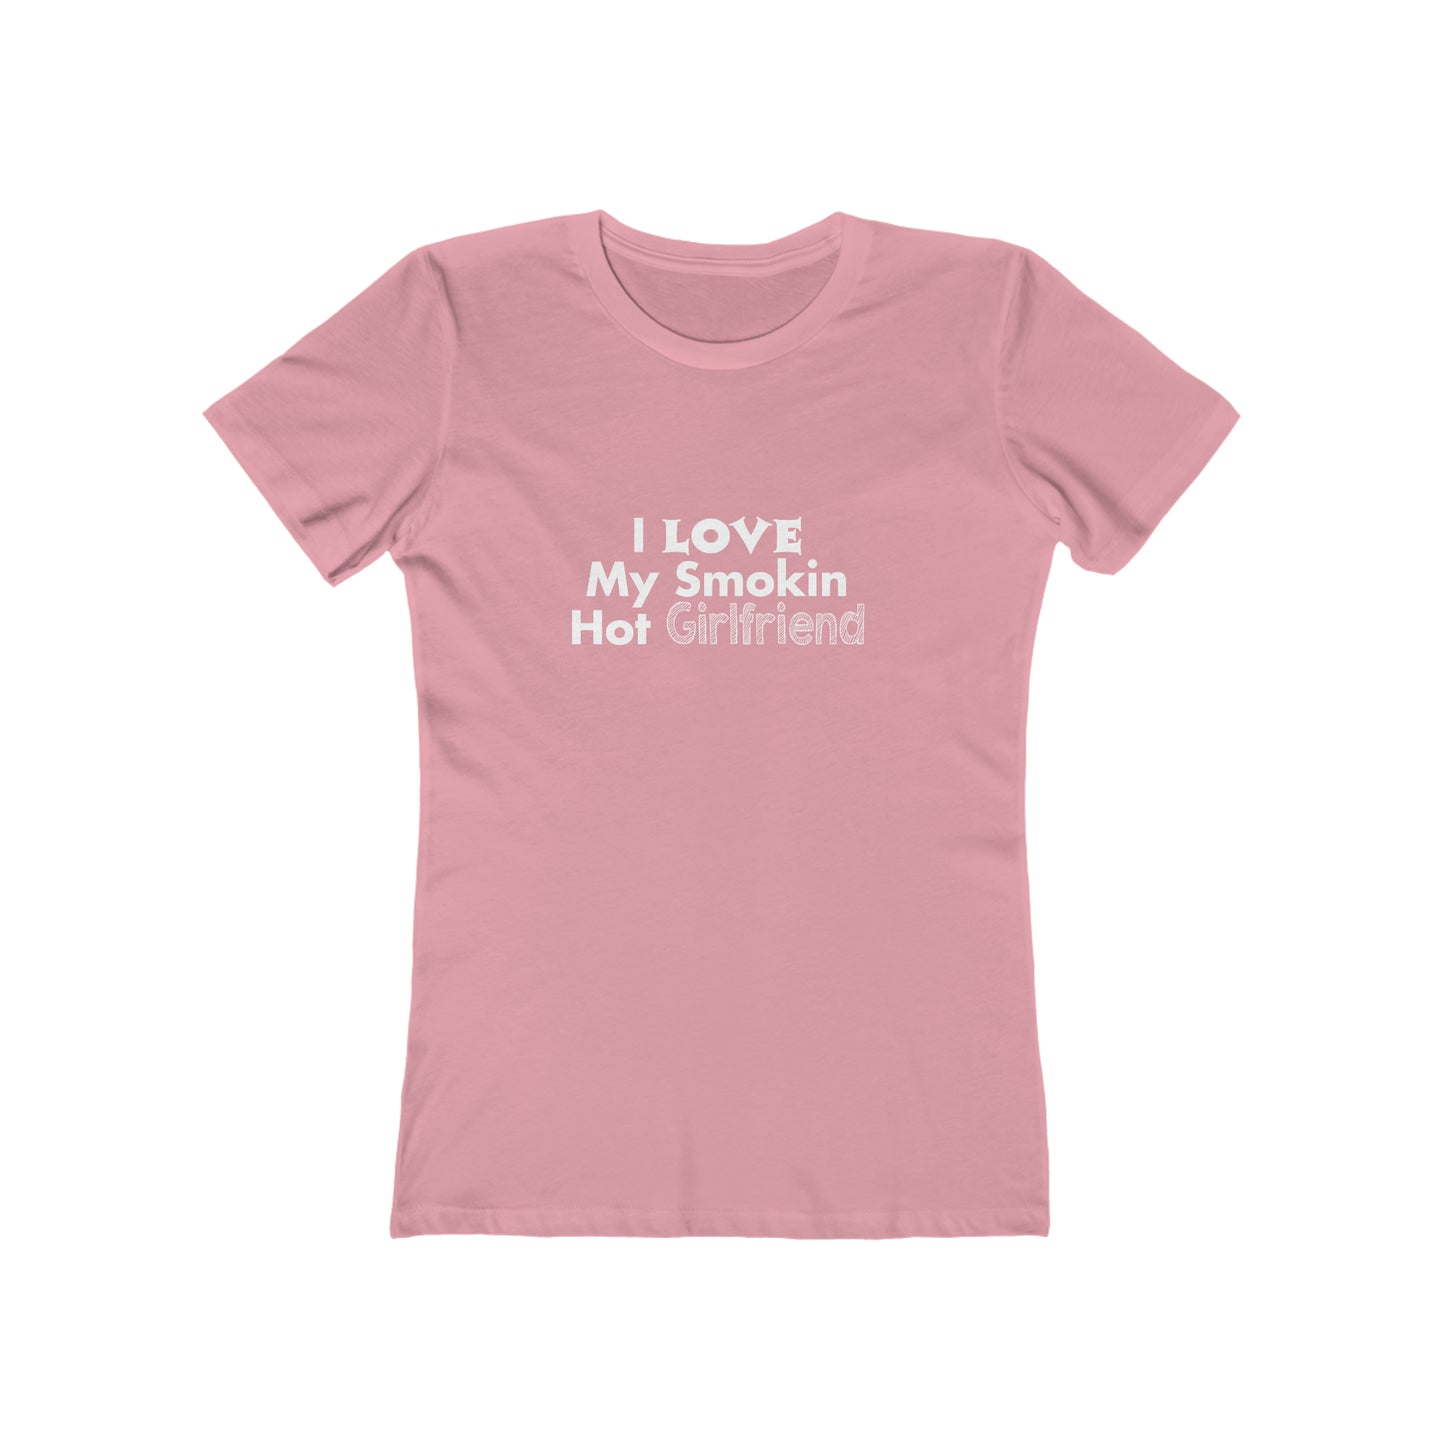 I Love My Smoking Hot Girlfriend - Women's T-shirt